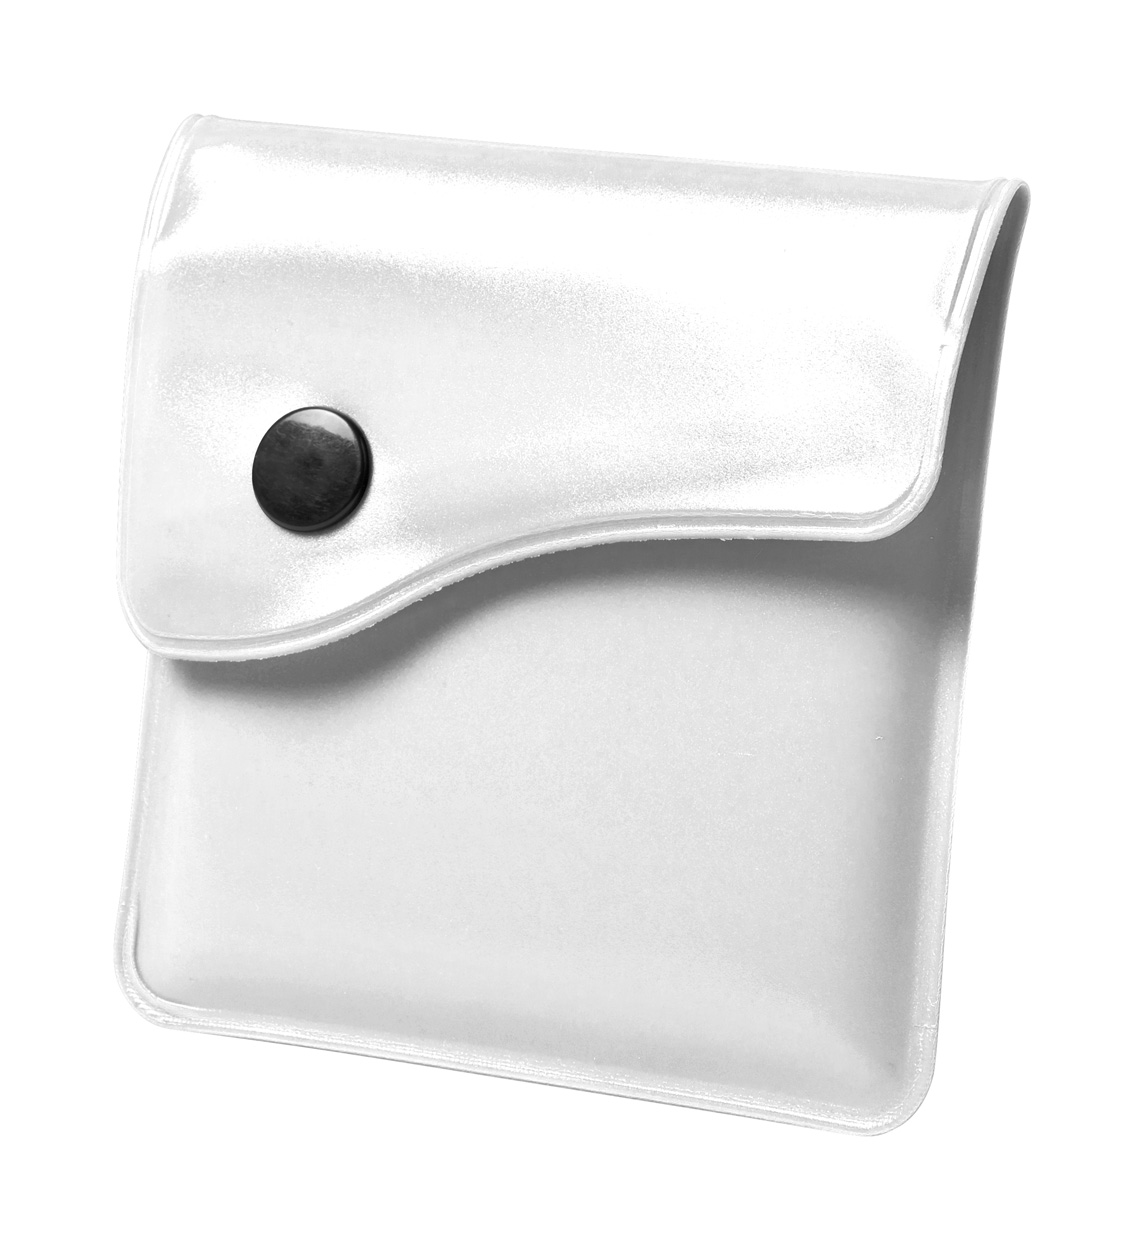 Berko pocket ashtray - white